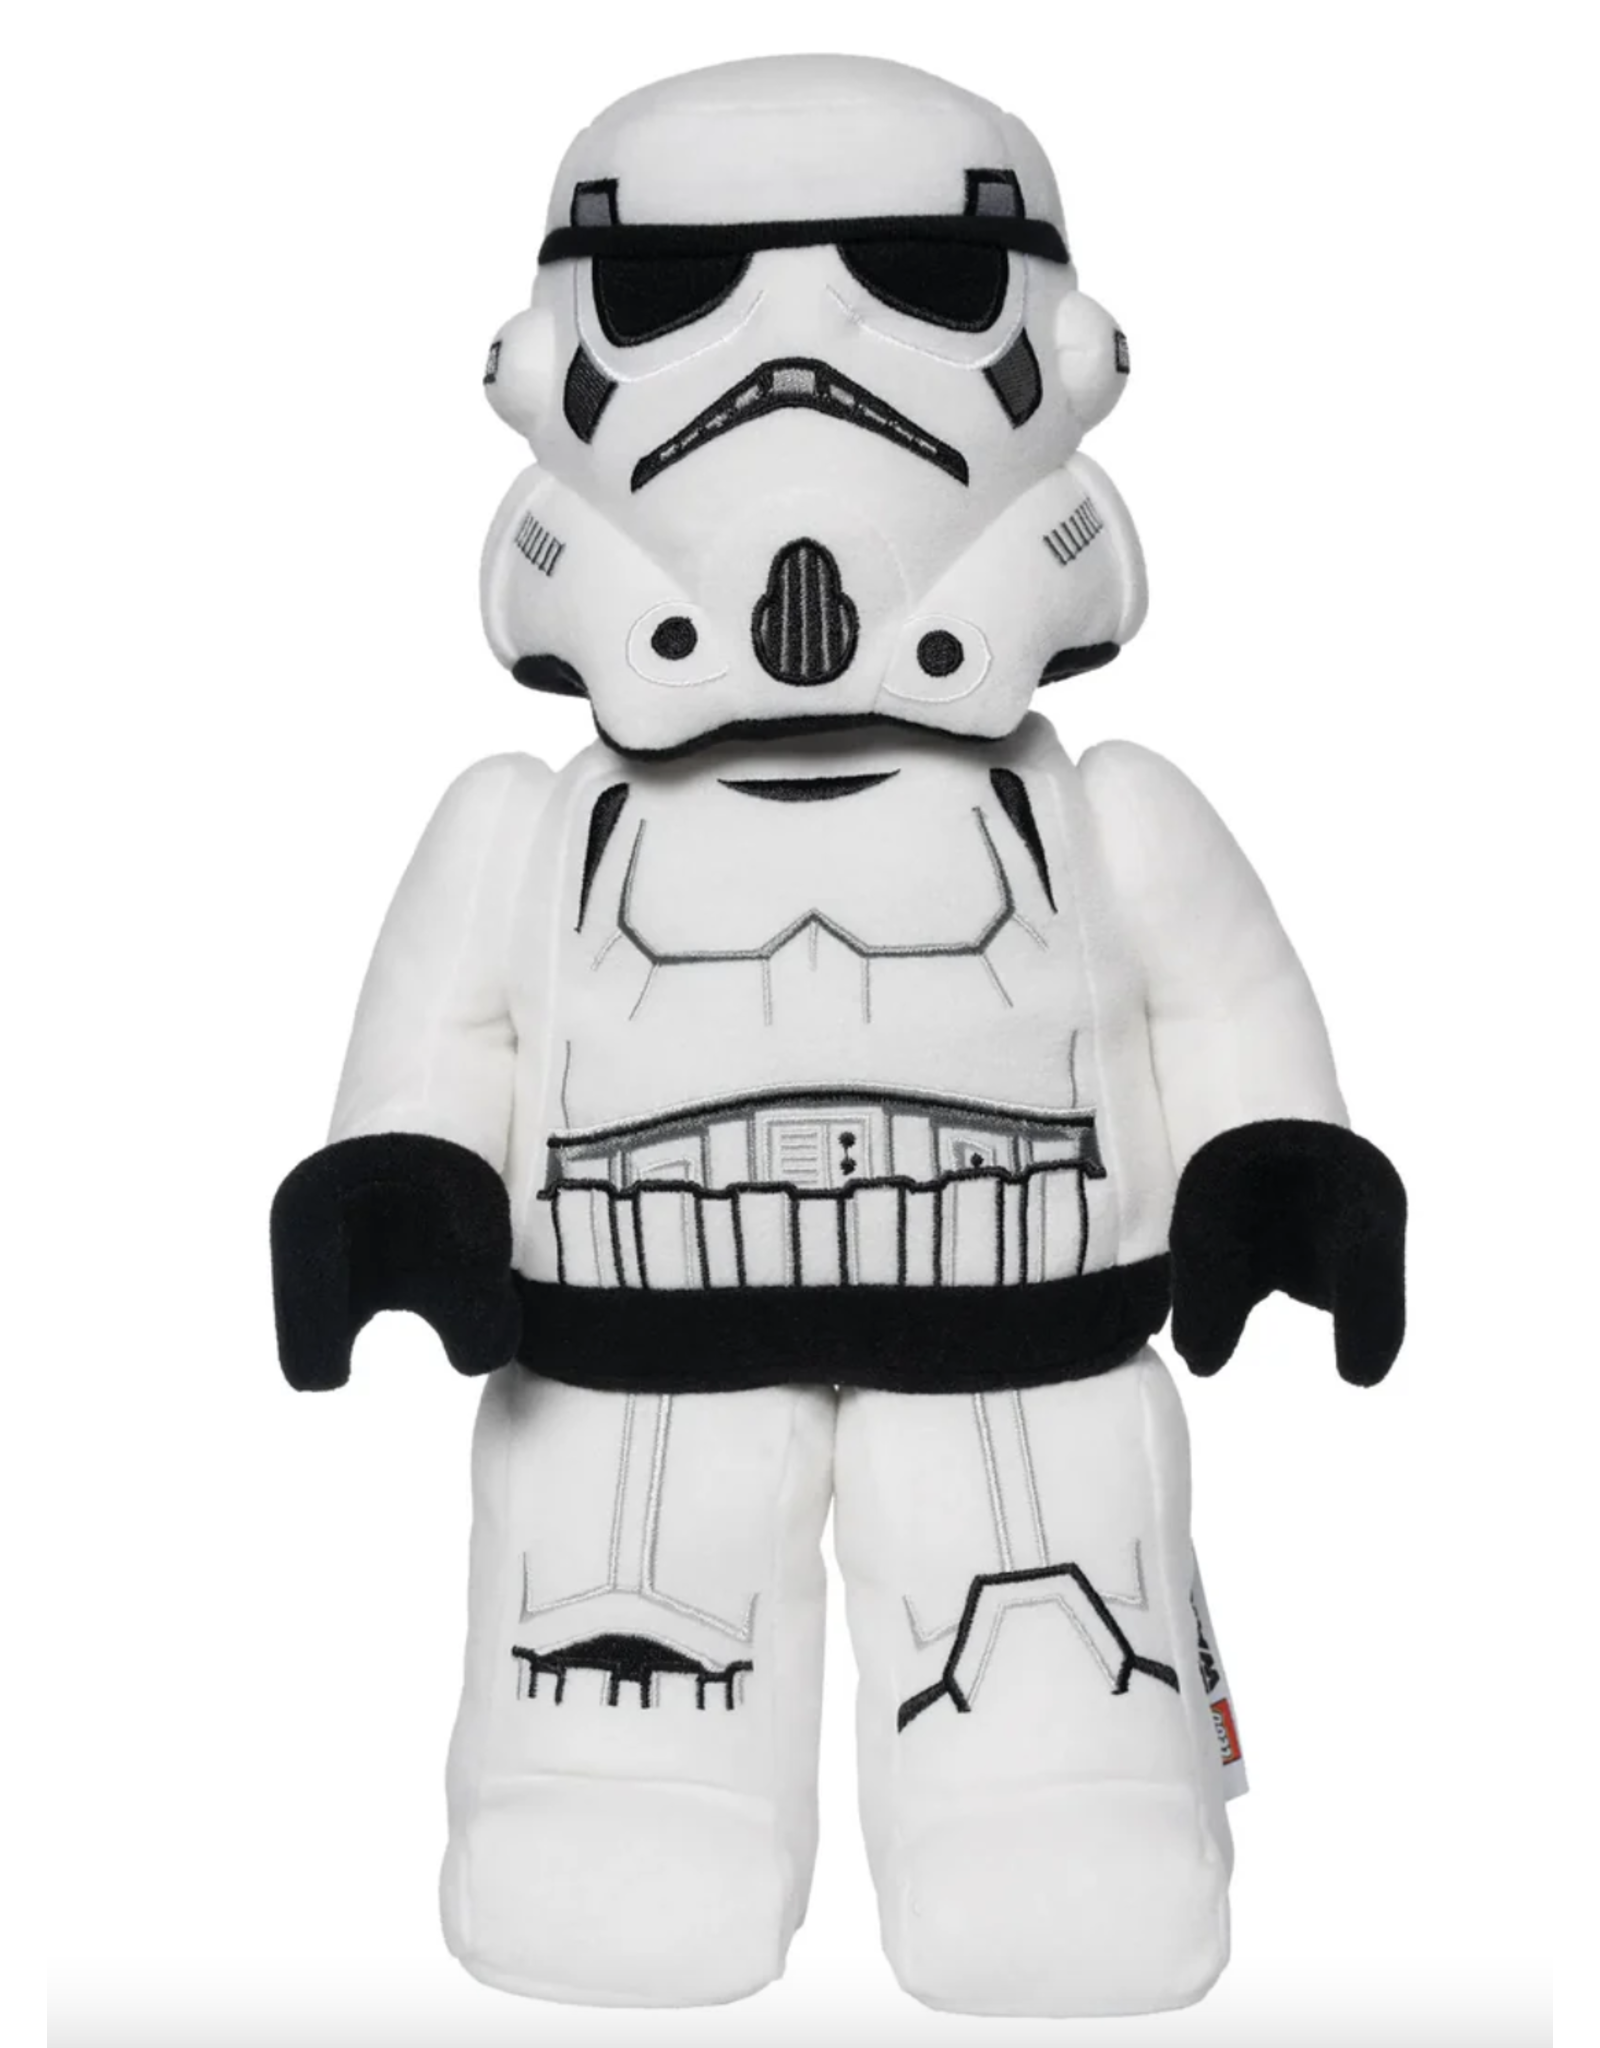 Lego LEGO Star Wars Stormtrooper Plush Minifigure